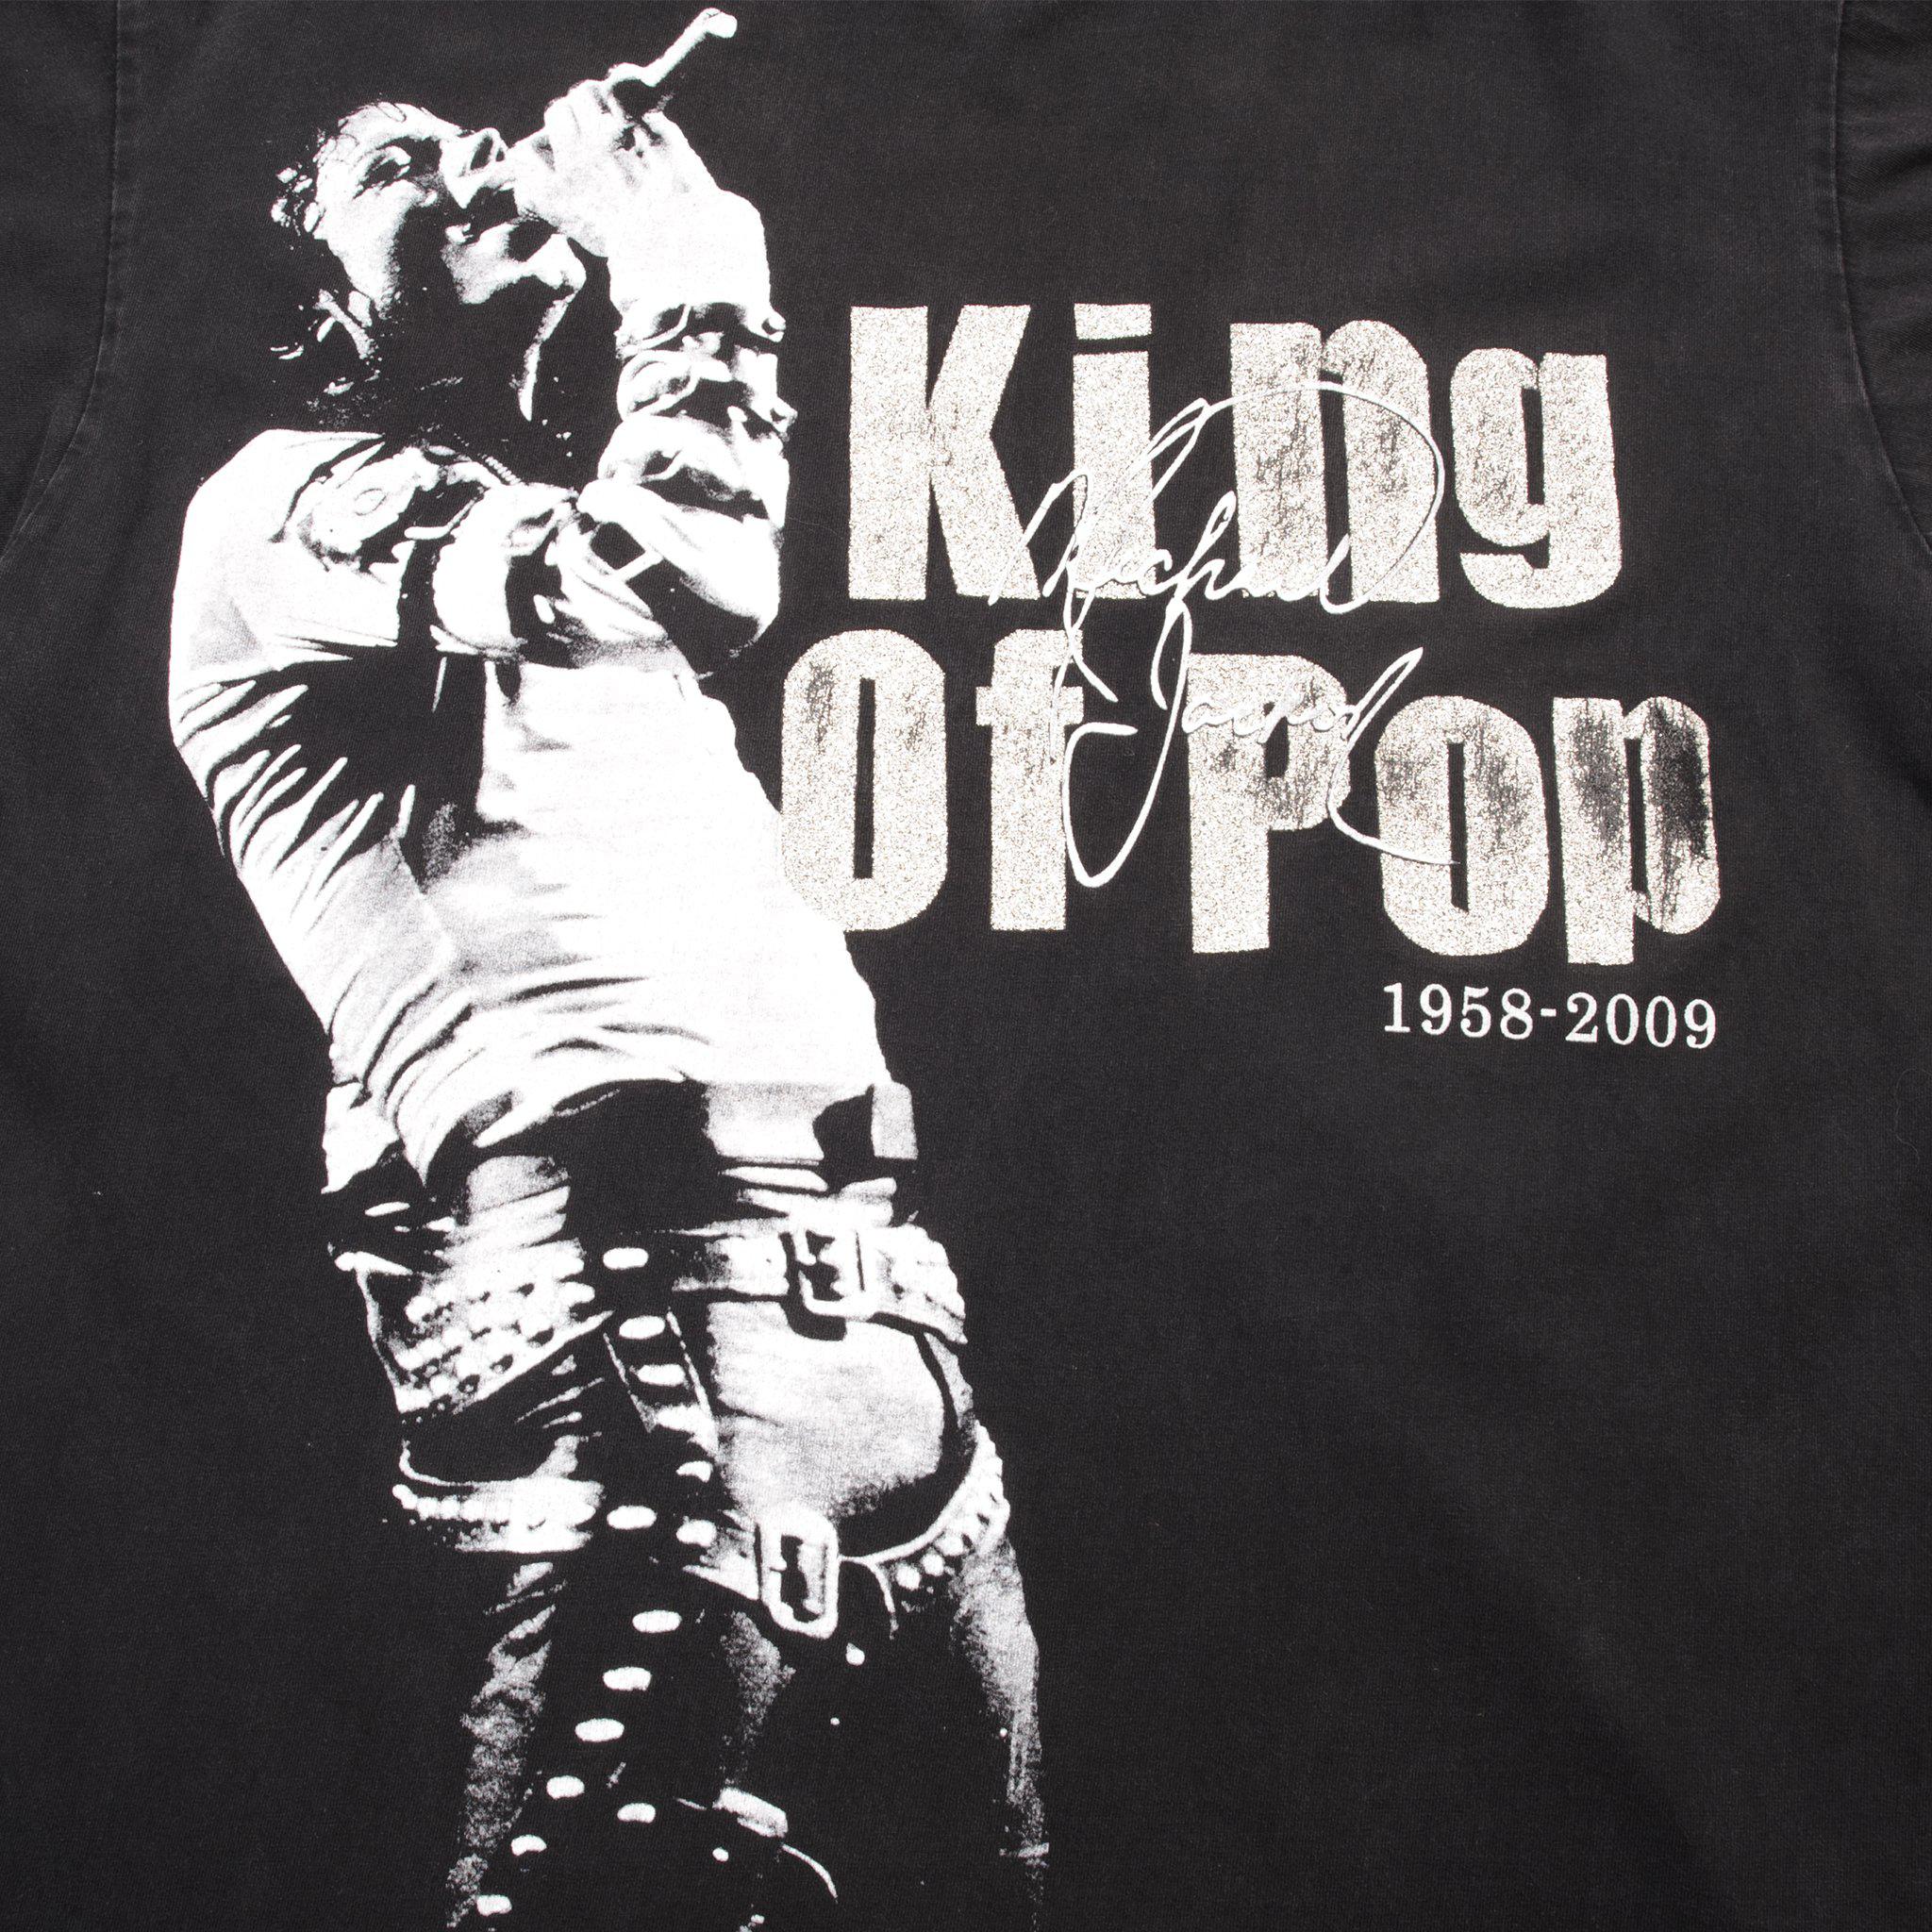 Shirts, Vintage Michael Jackson King Of Pop T Shirt Blacknwith Glitter